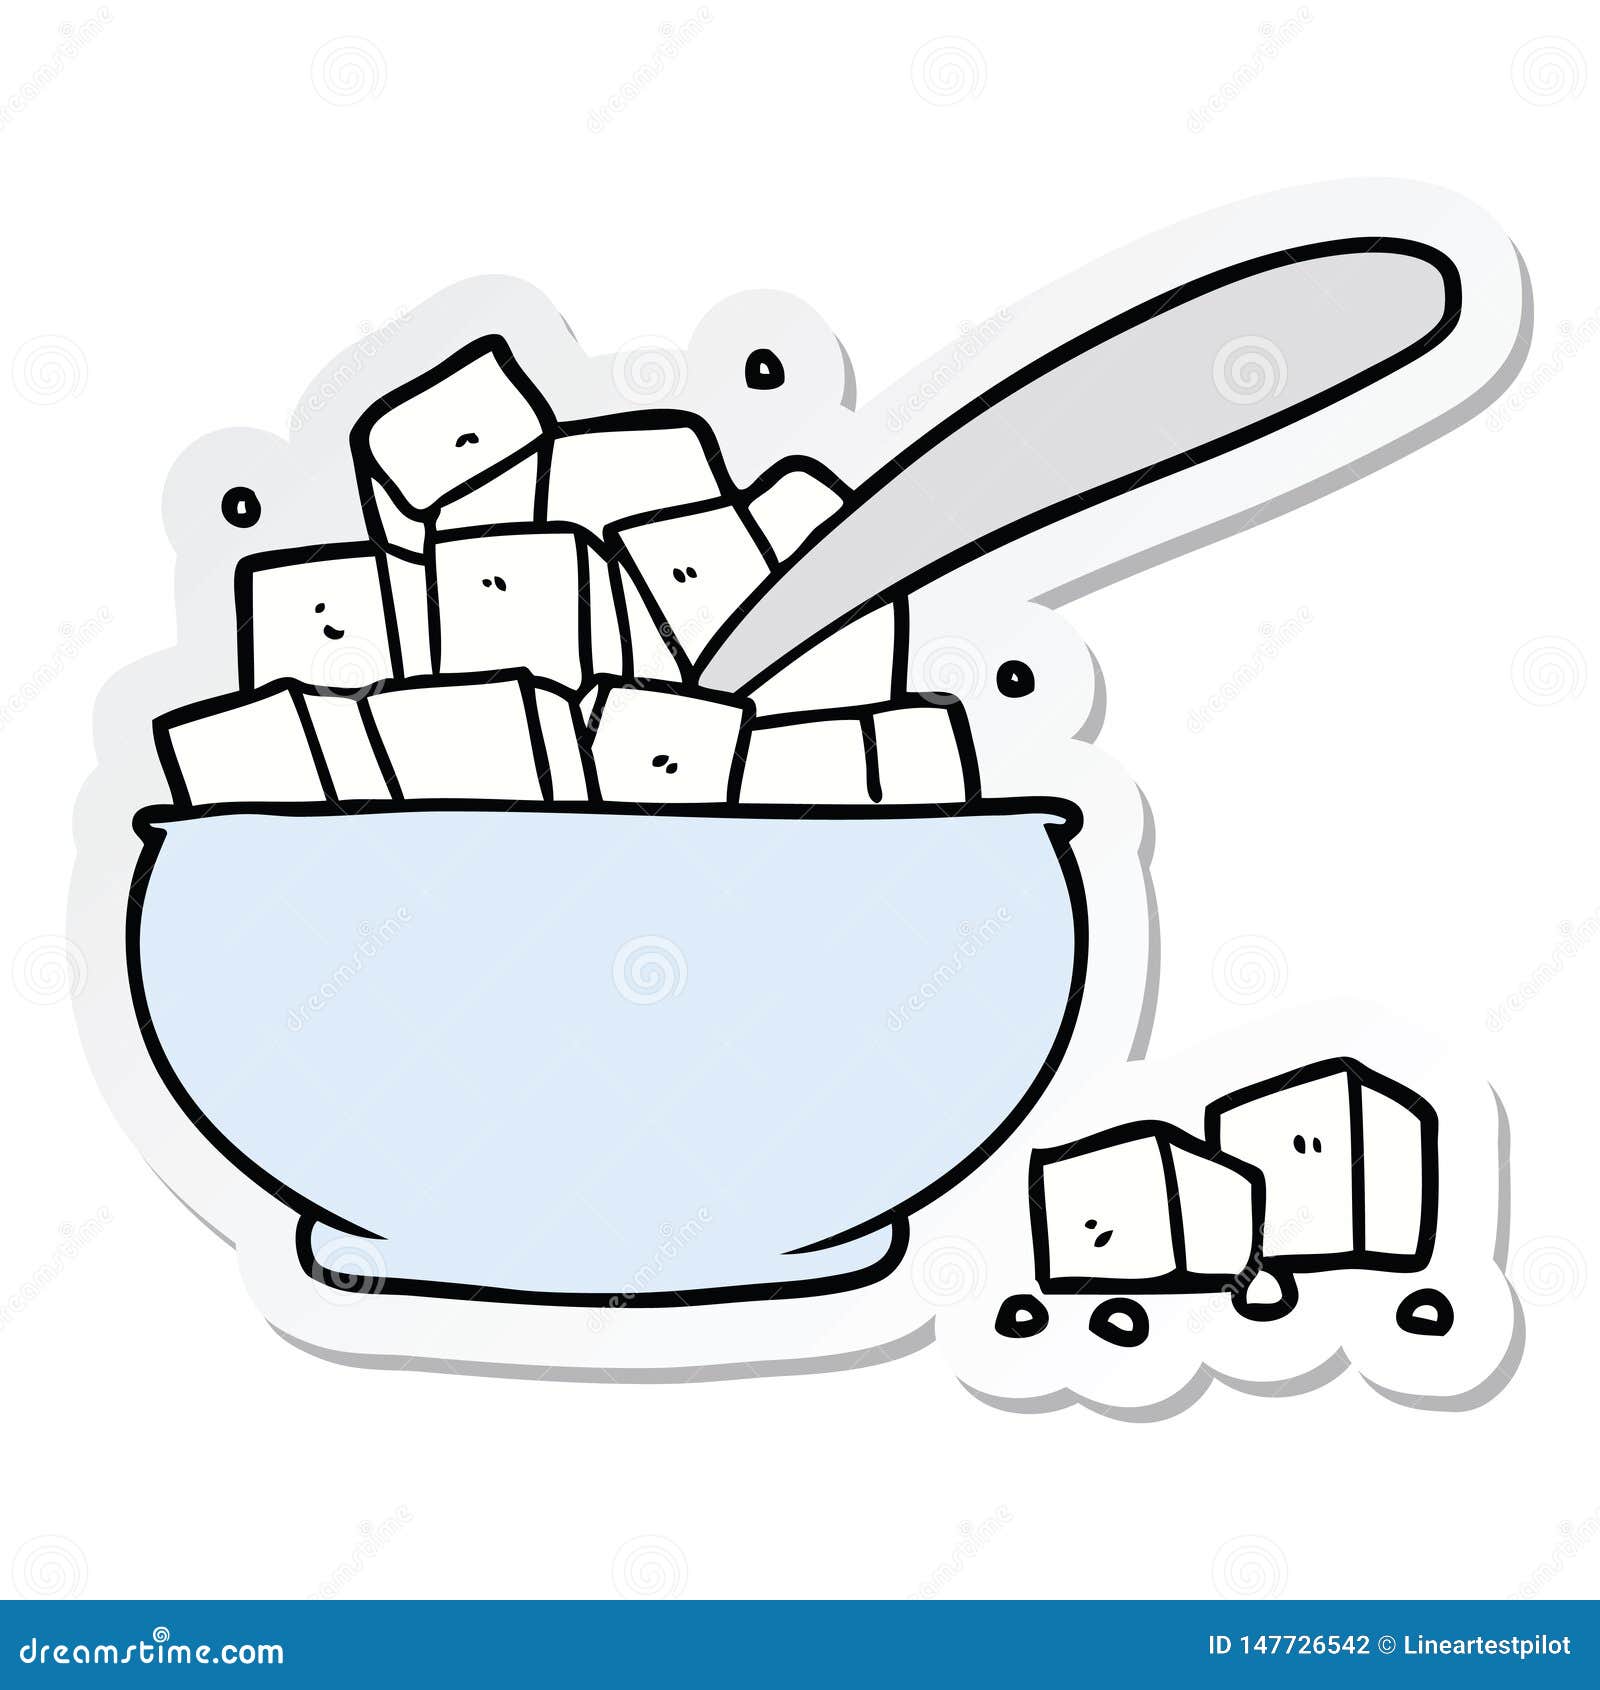 Sticker of a Cartoon Sugar Bowl Stock Vector - Illustration of character,  sugar: 147726542